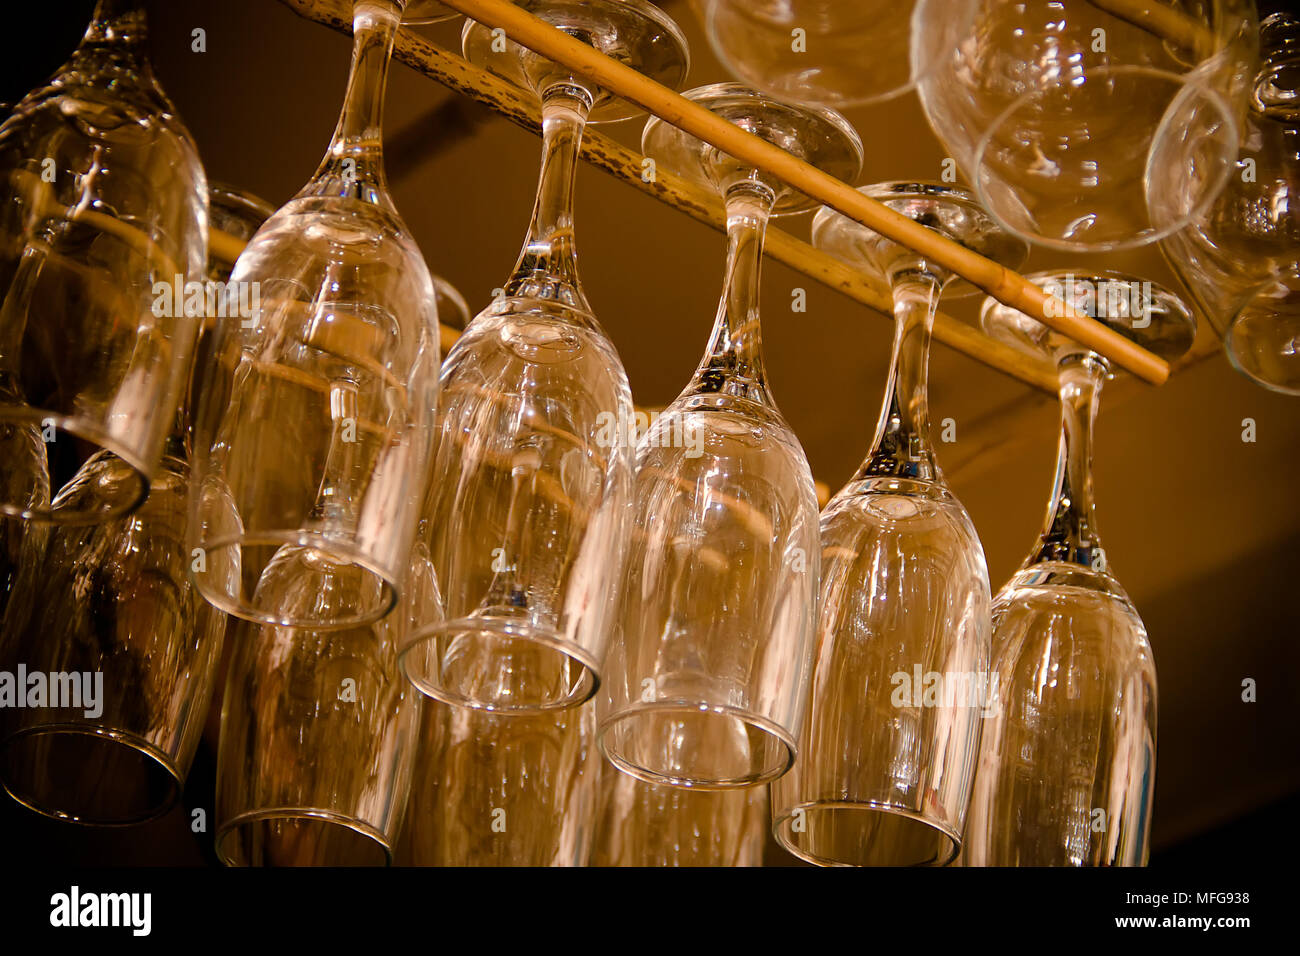 Glasses hanging upsidedown in wine bar interior Stock Photo